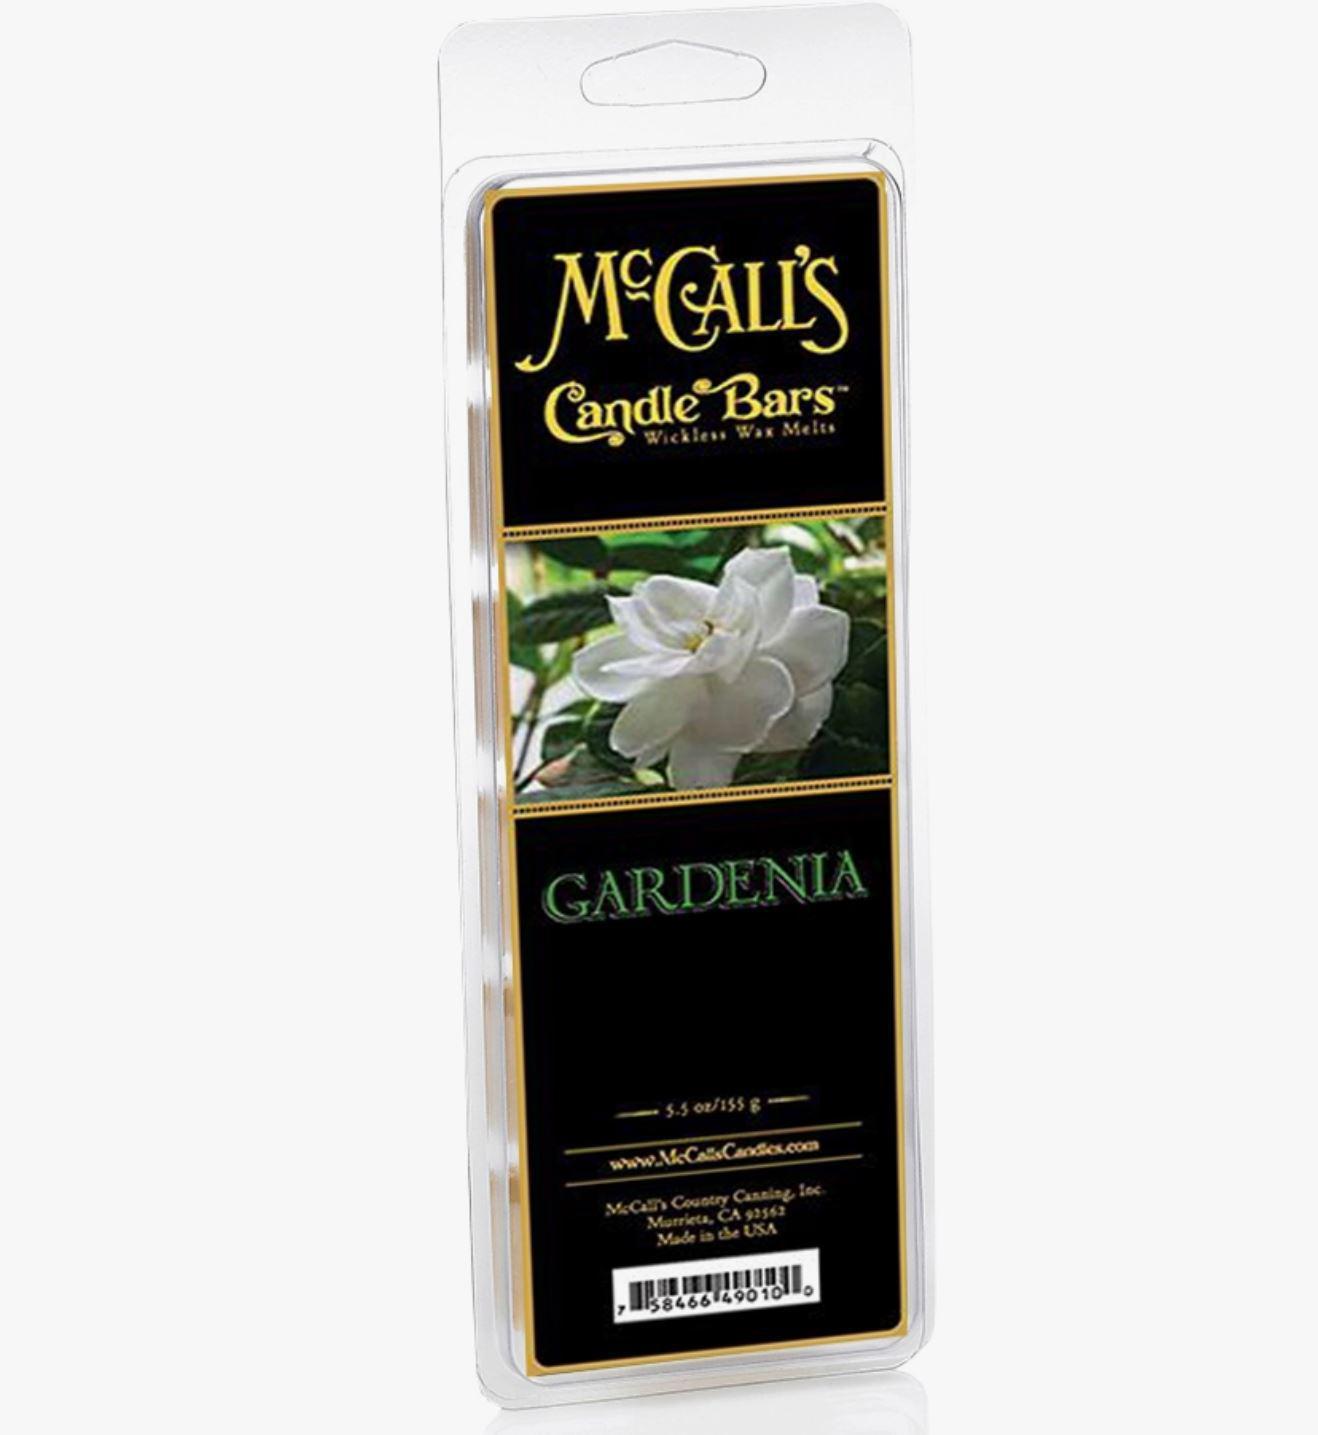 McCall's Candle Bars Wax Melts | Gardenia